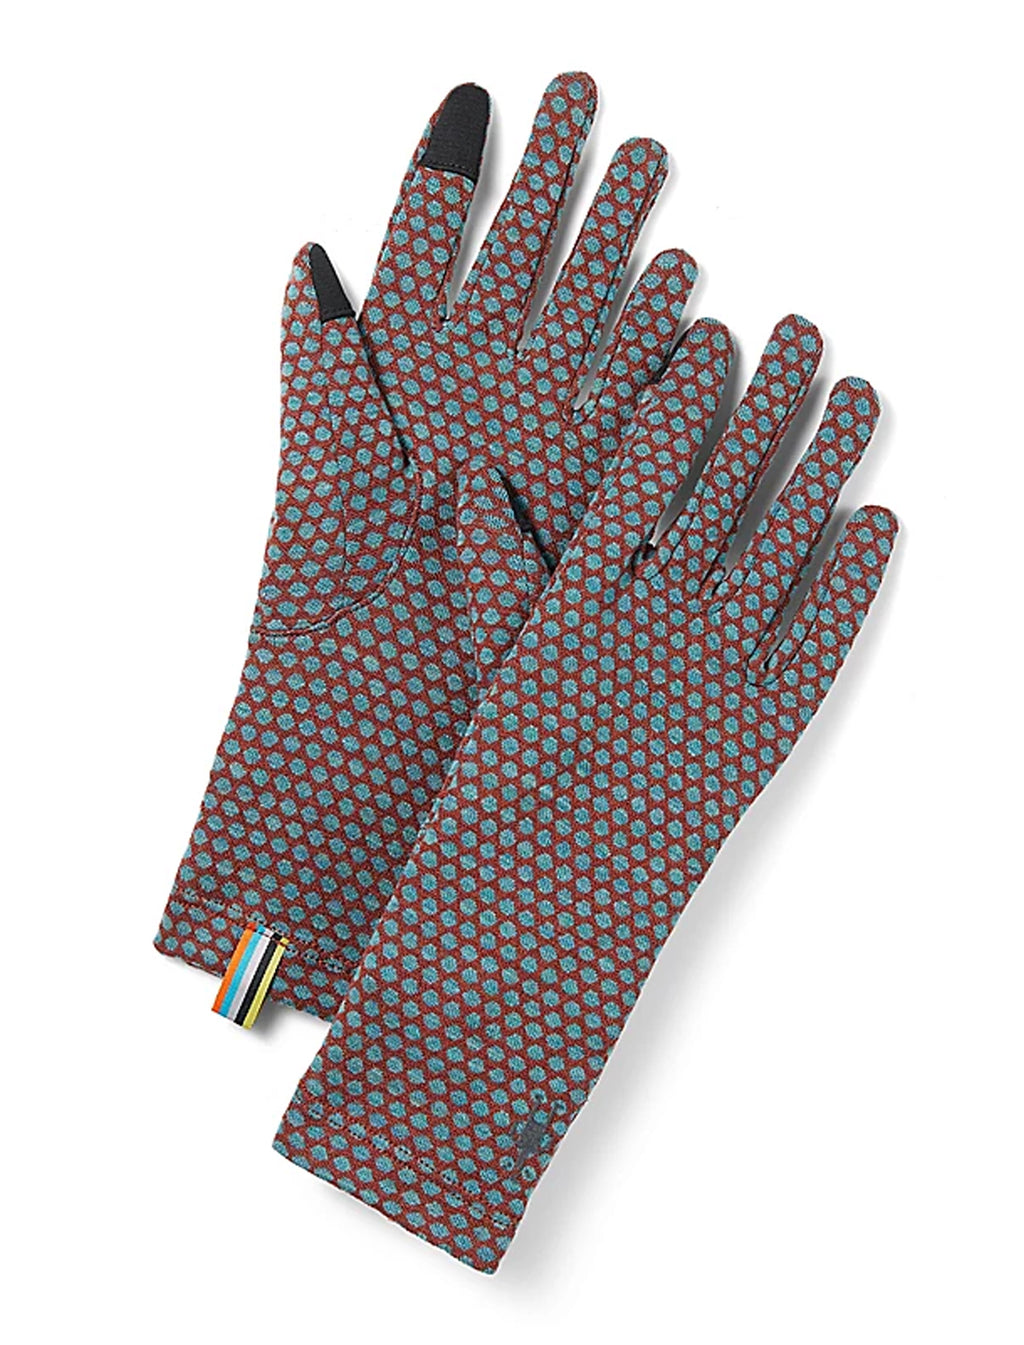 Smartwool Thermal Merino Glove, Pecan Brown Dot 